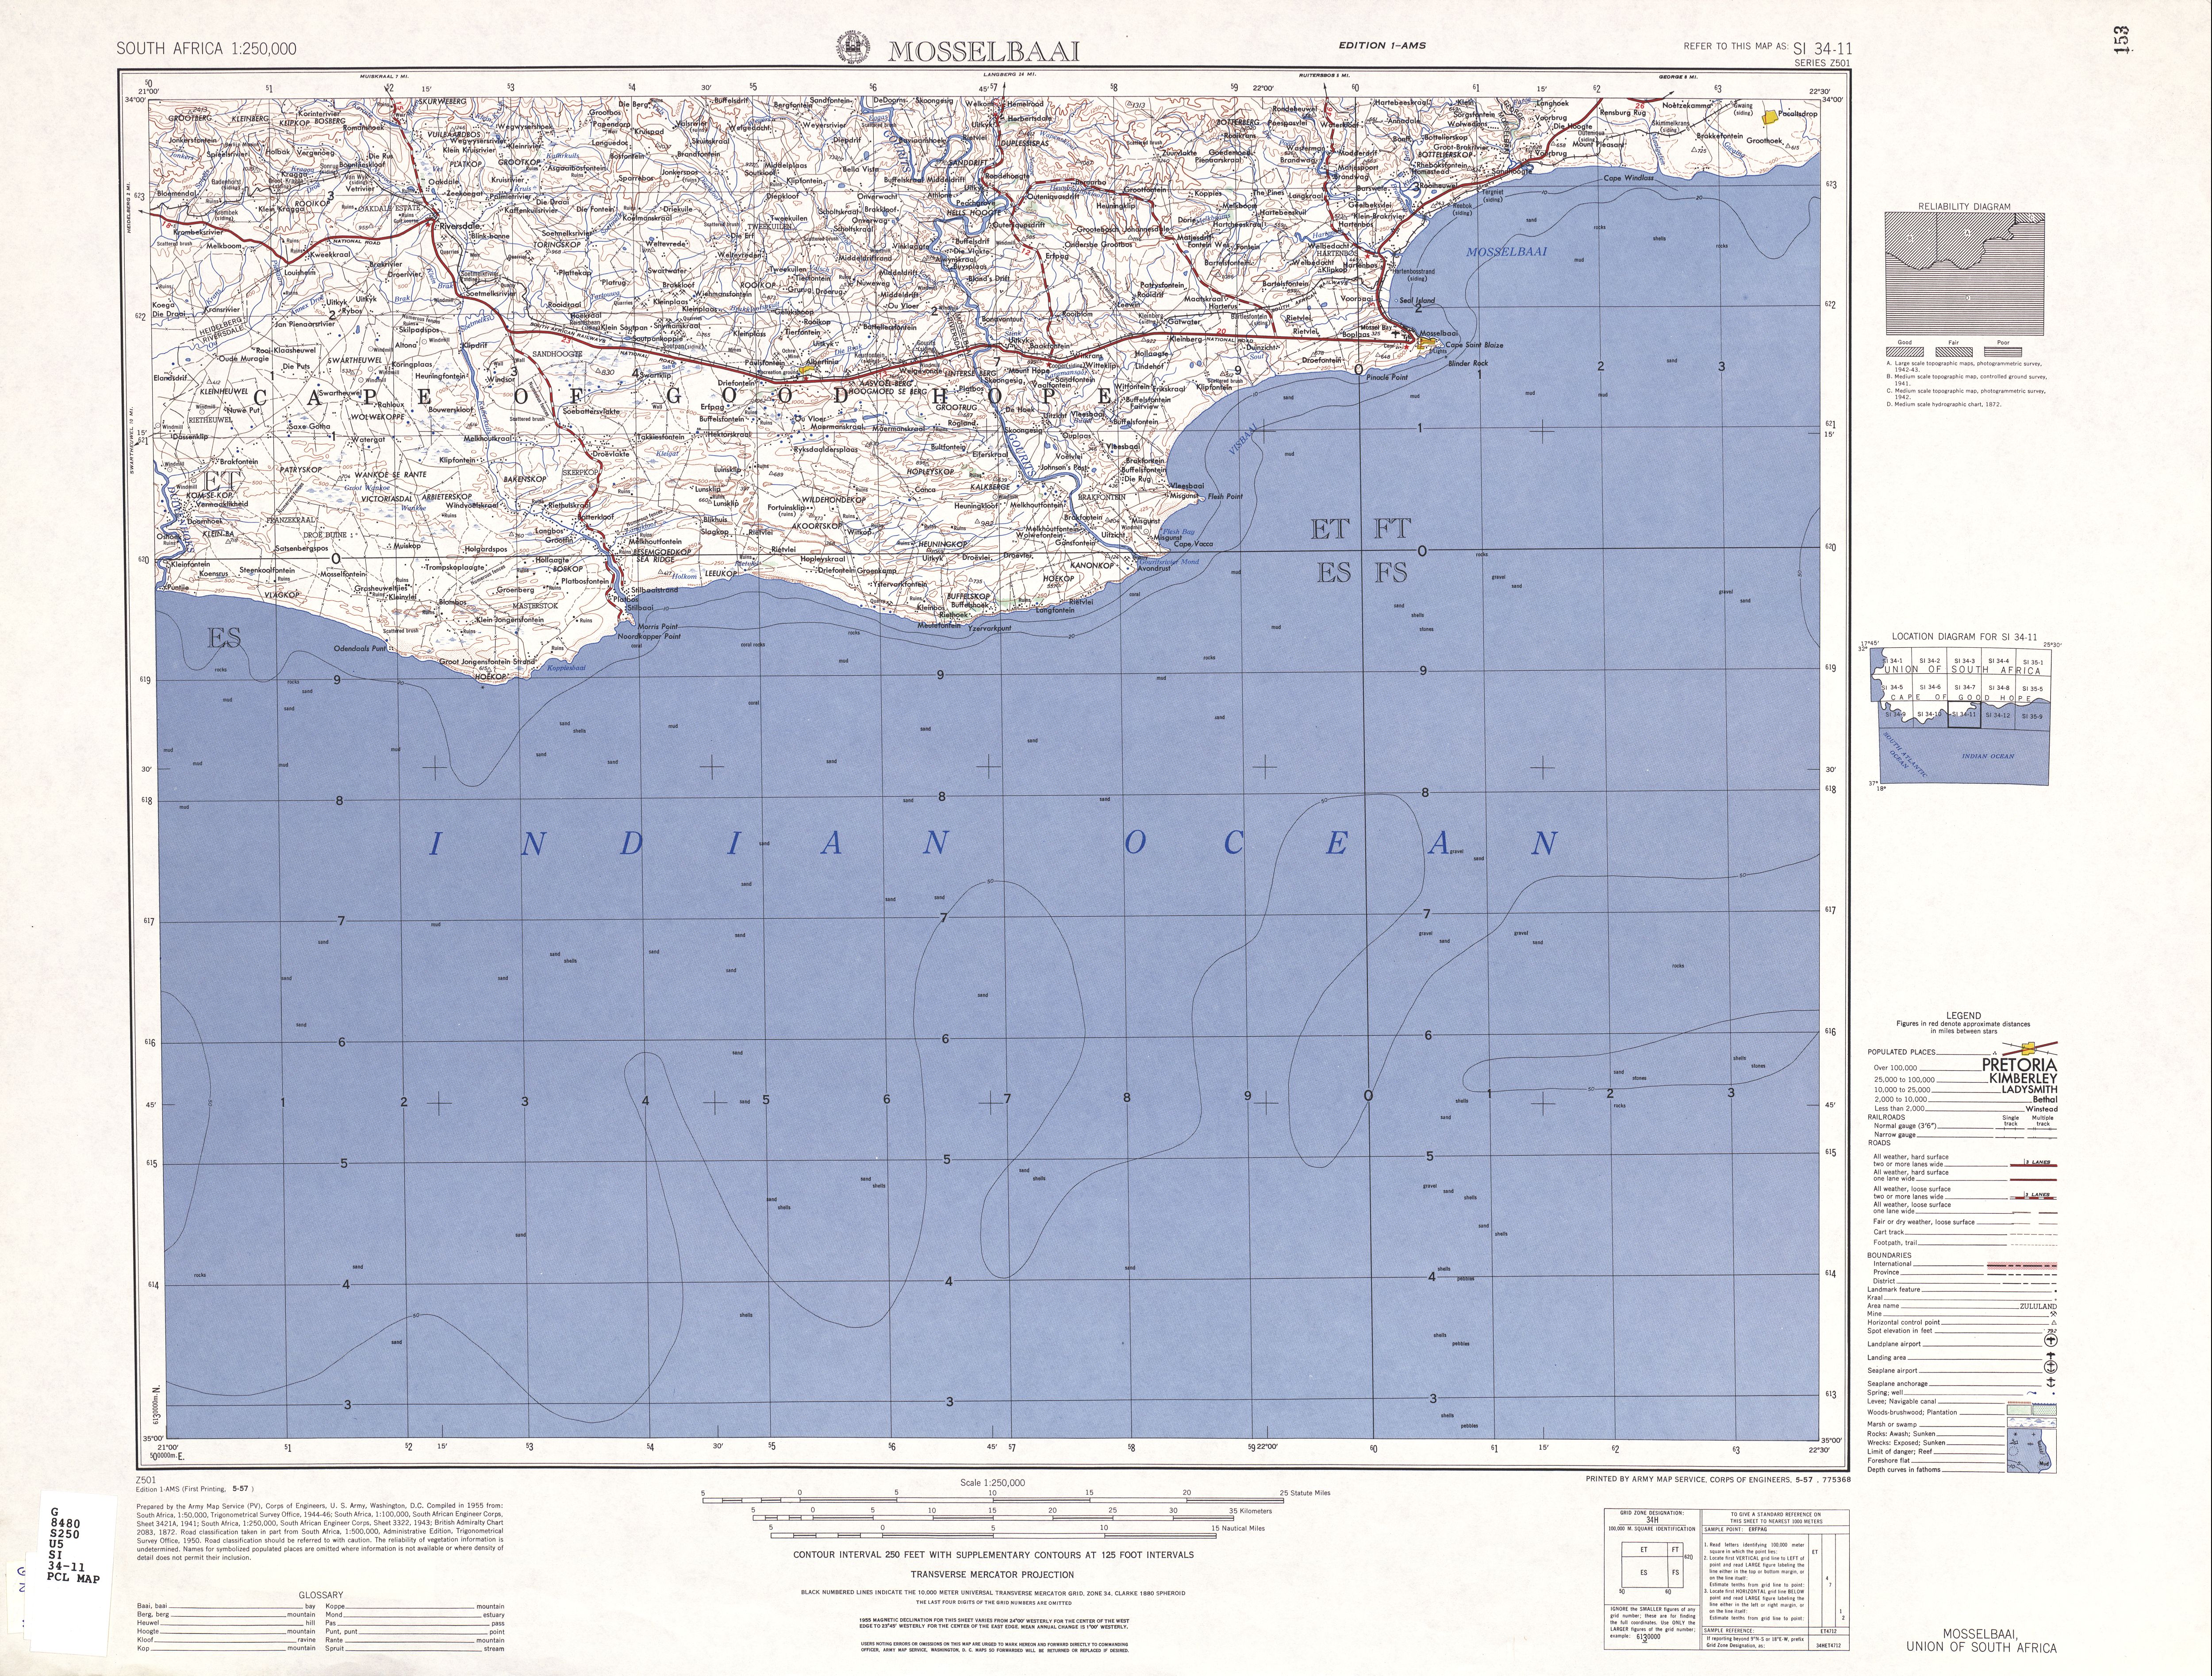 Hoja Mosselbaai del Mapa Topográfico de África Meridional 1954